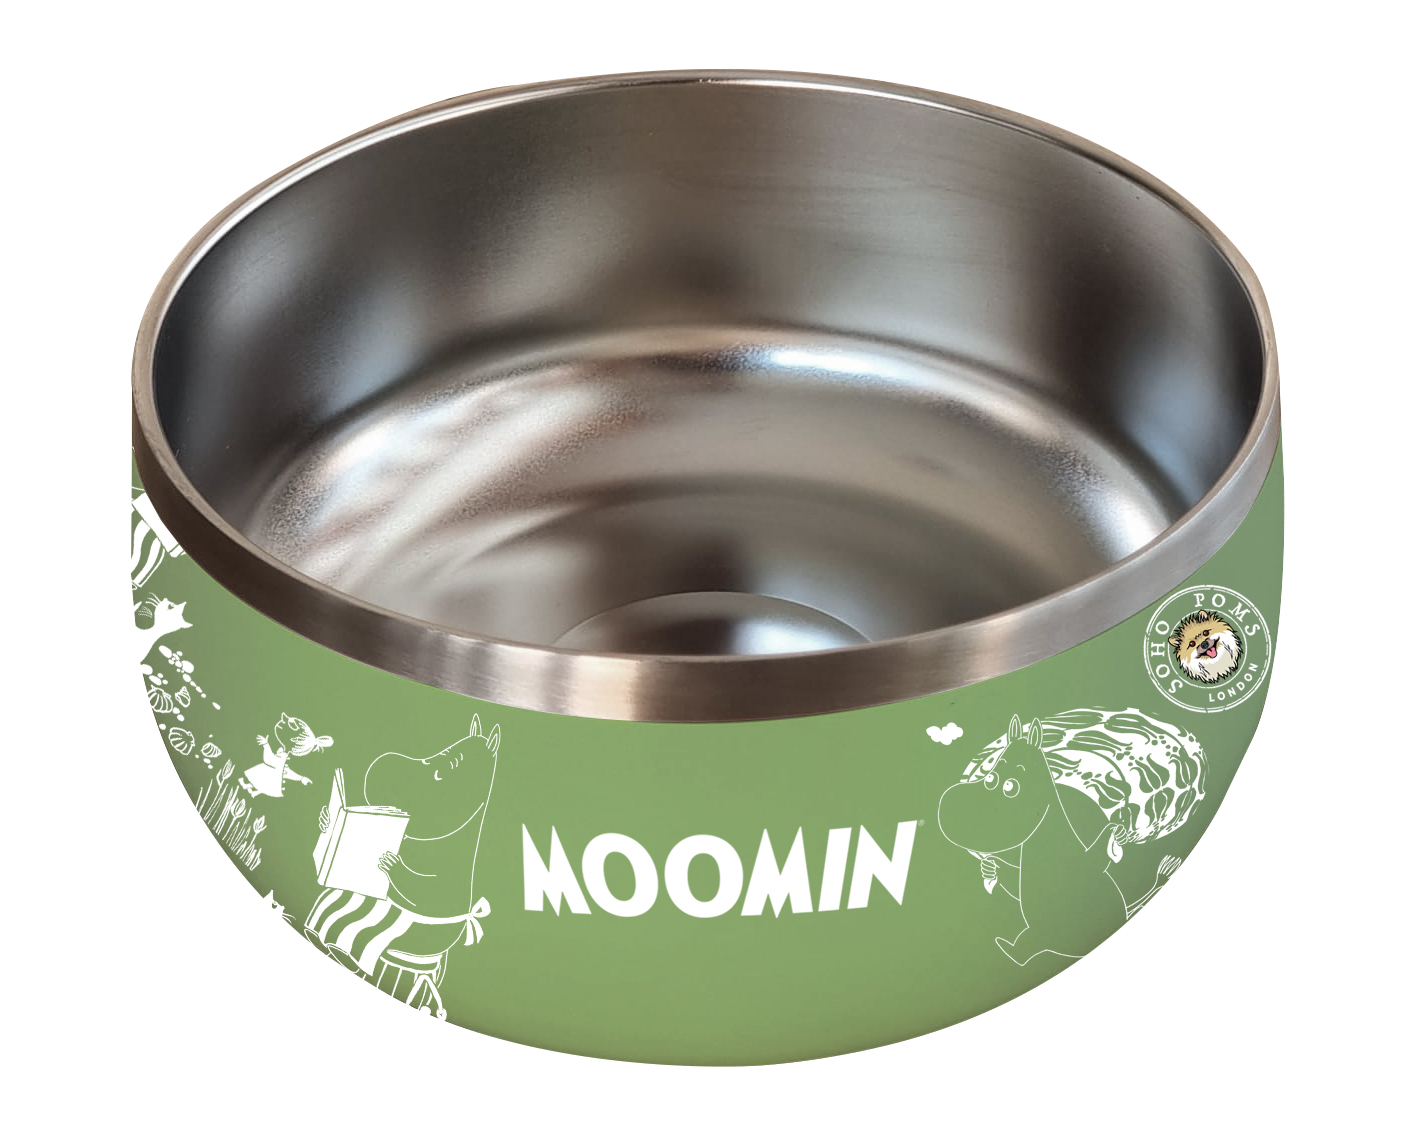 Moomins Lunar Bowl Green by SohoPoms